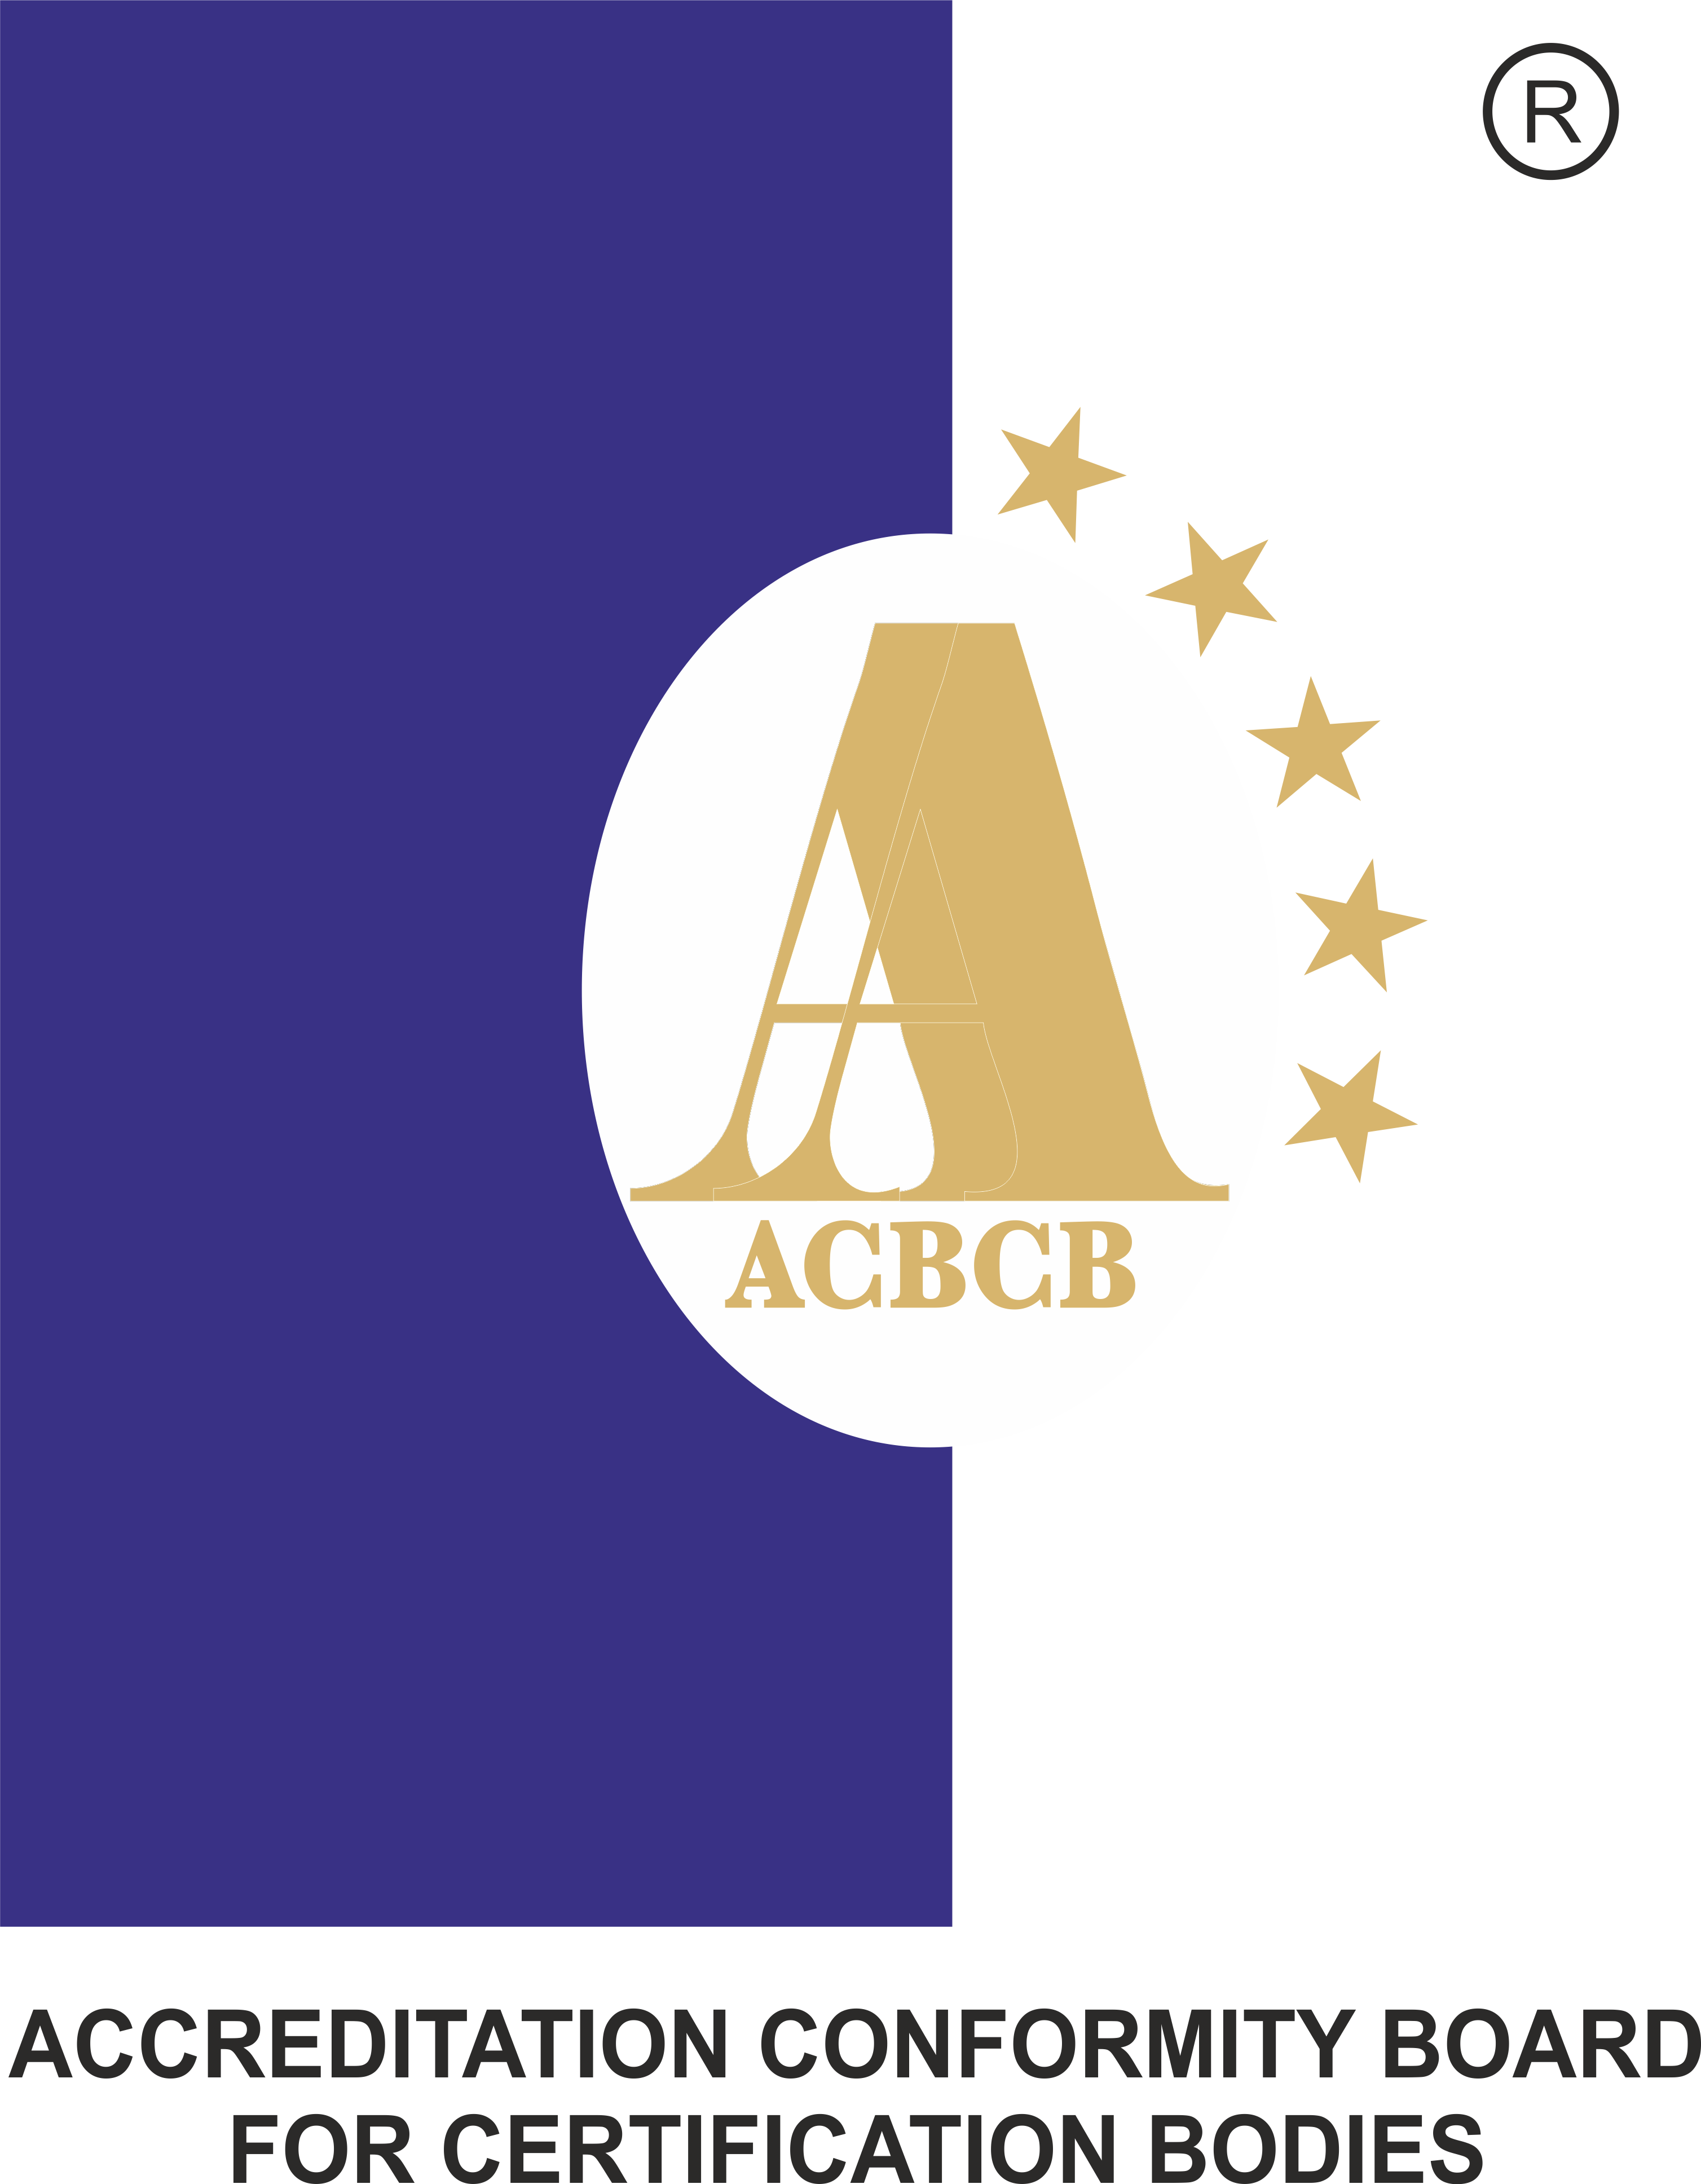 ACBCB